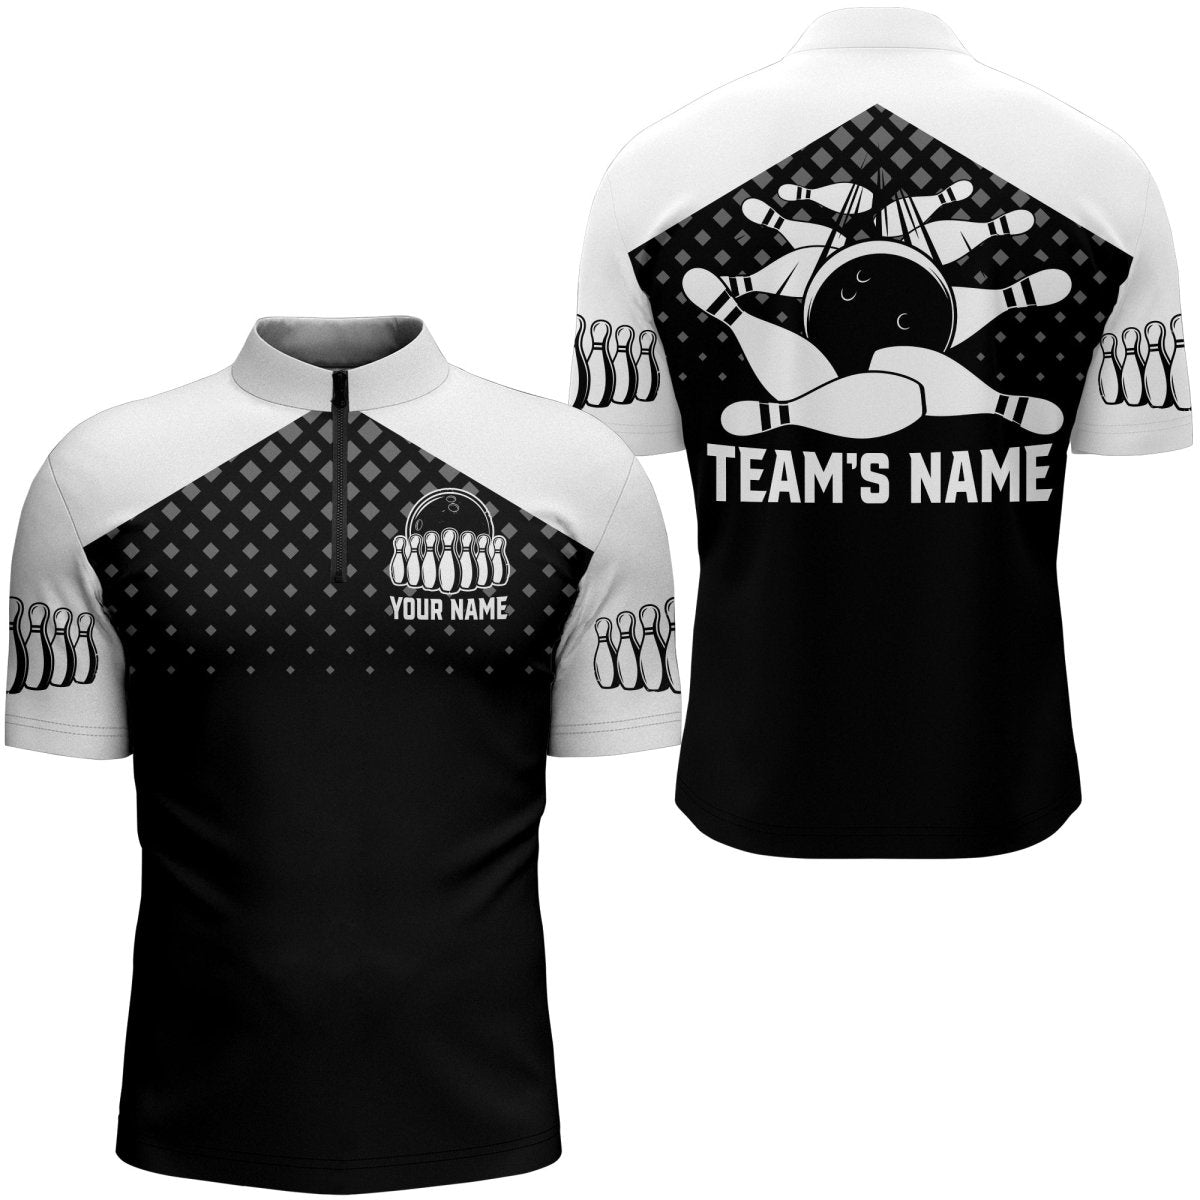 Schwarzes Weißes Bowling-Quarter-Zip-Shirt für Herren - Personalisiertes Bowling-Trikot - 1/4 Zip Bowling-Shirt für Teams D47 - Climcat